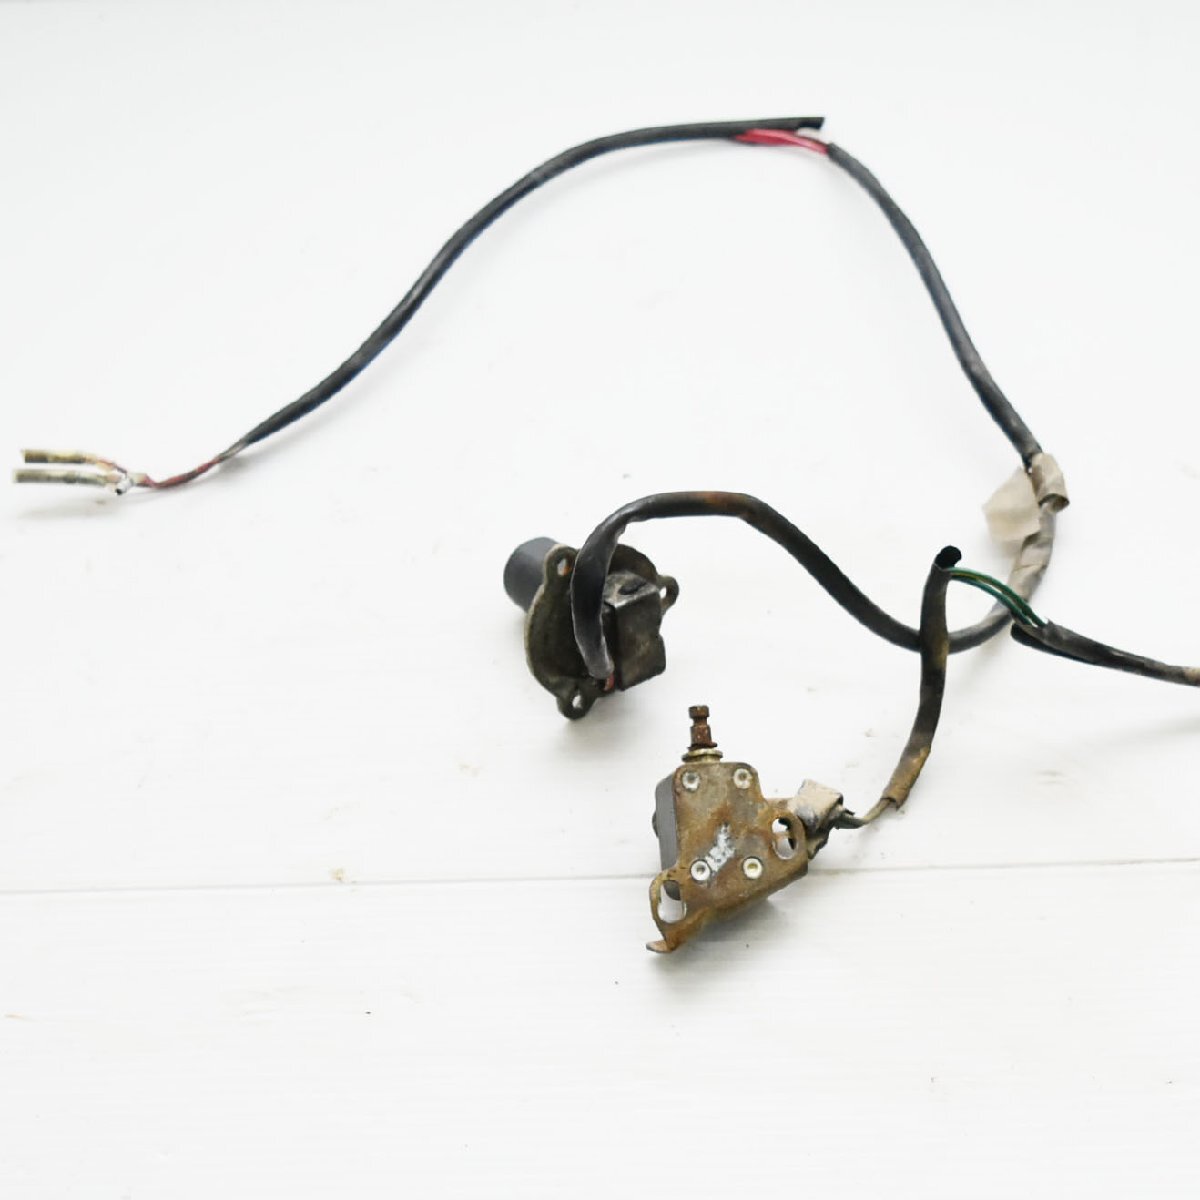  Fuji Heavy Industries rabbit 125 S301 brake sensor light dimmer switch [A]885